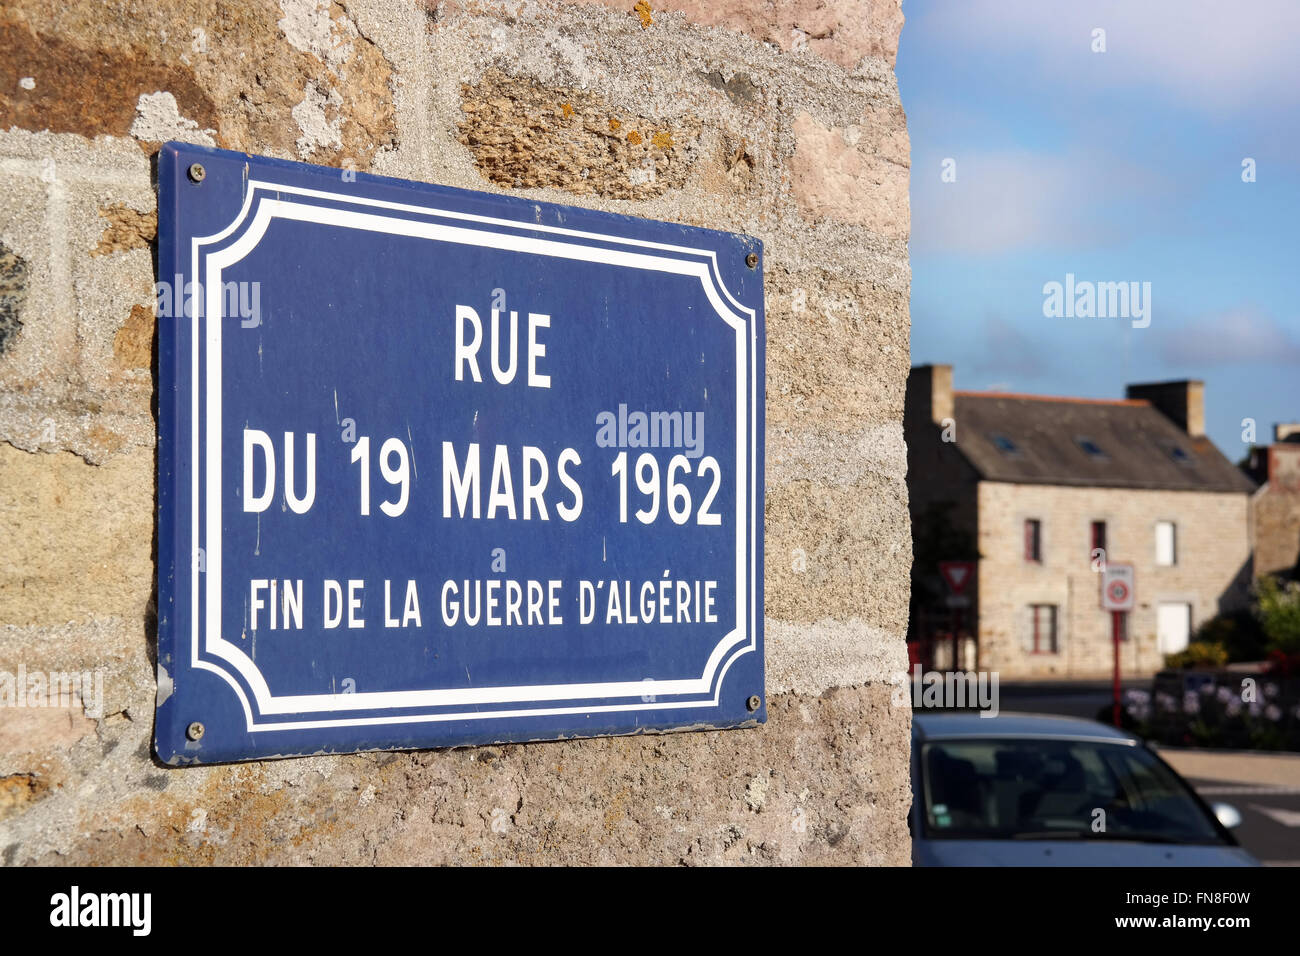 Streetname segno: Rue du 19 mars 1962, Fin de la Guerre d'Algerie Foto Stock